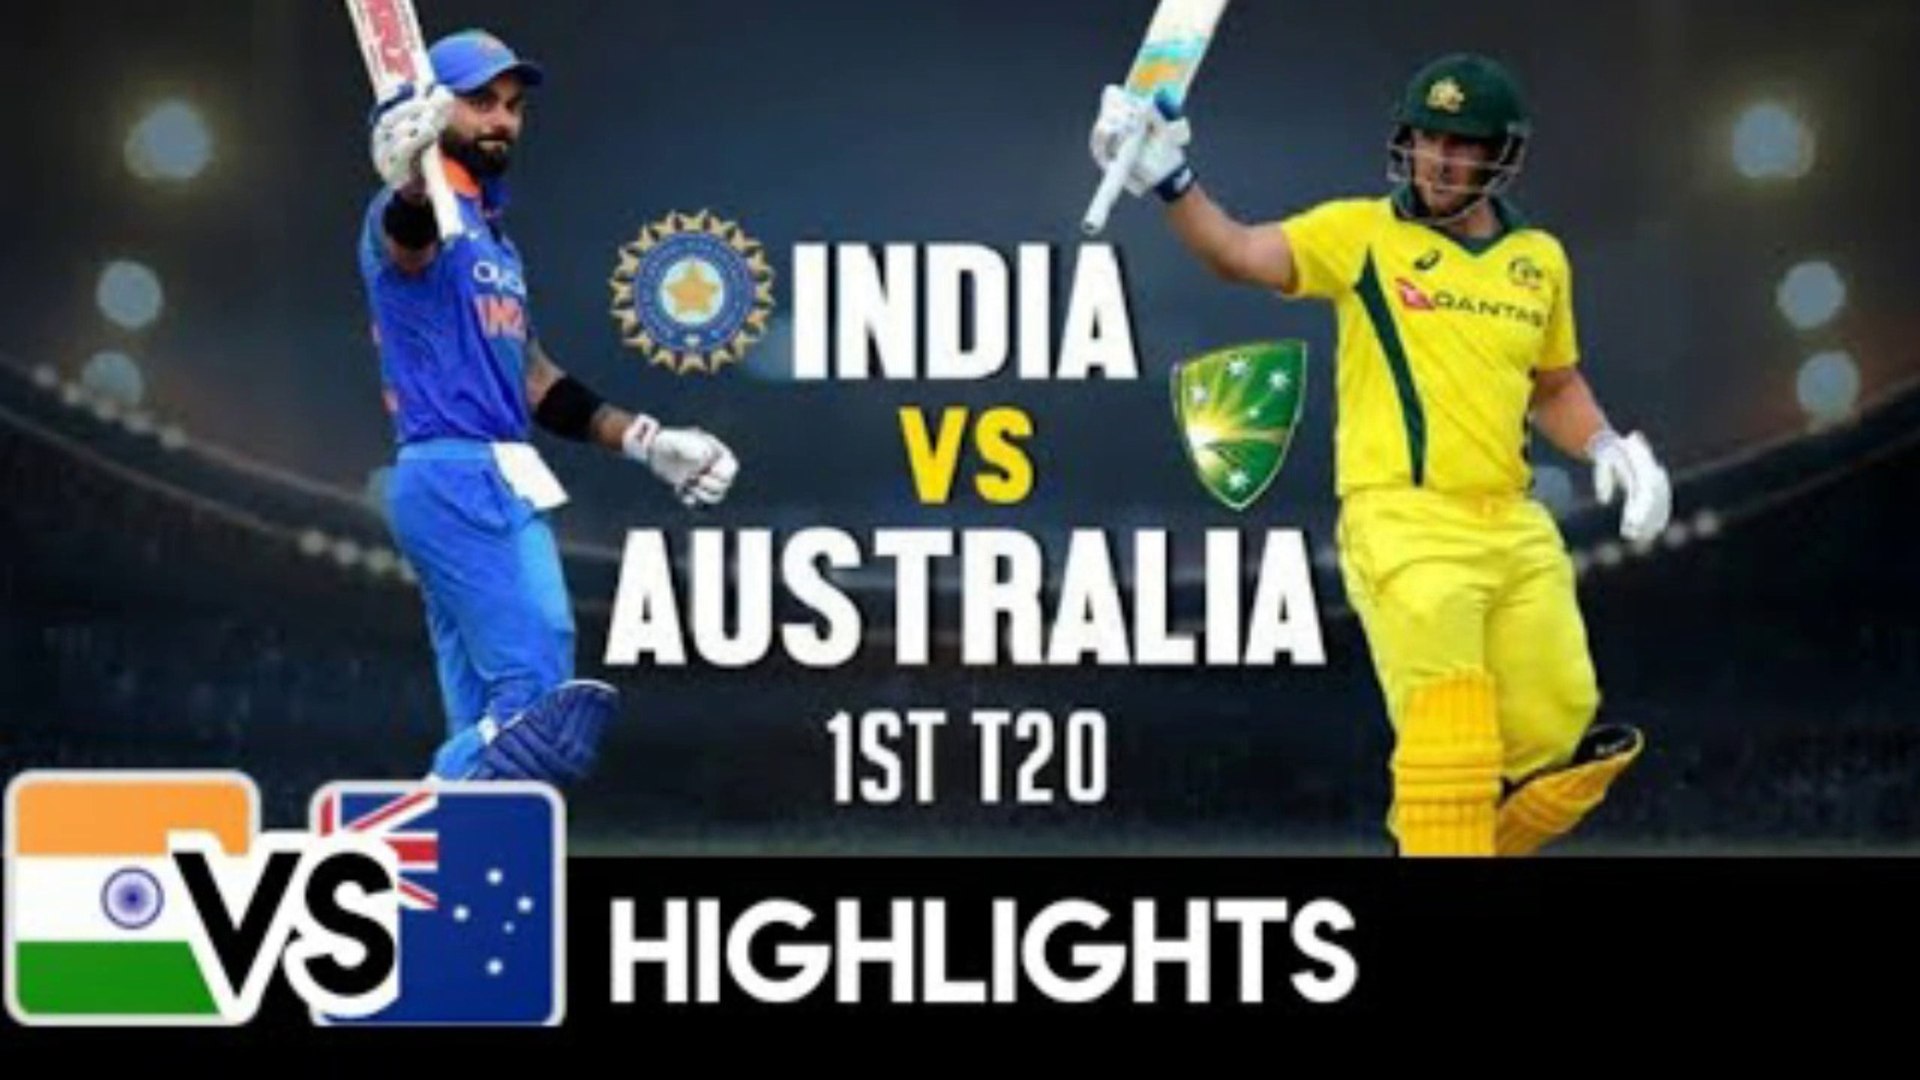 tobak Happening Virus Australia vs India 1st T20 2020 Full Match Highlights - cricket highlights  2 - video Dailymotion